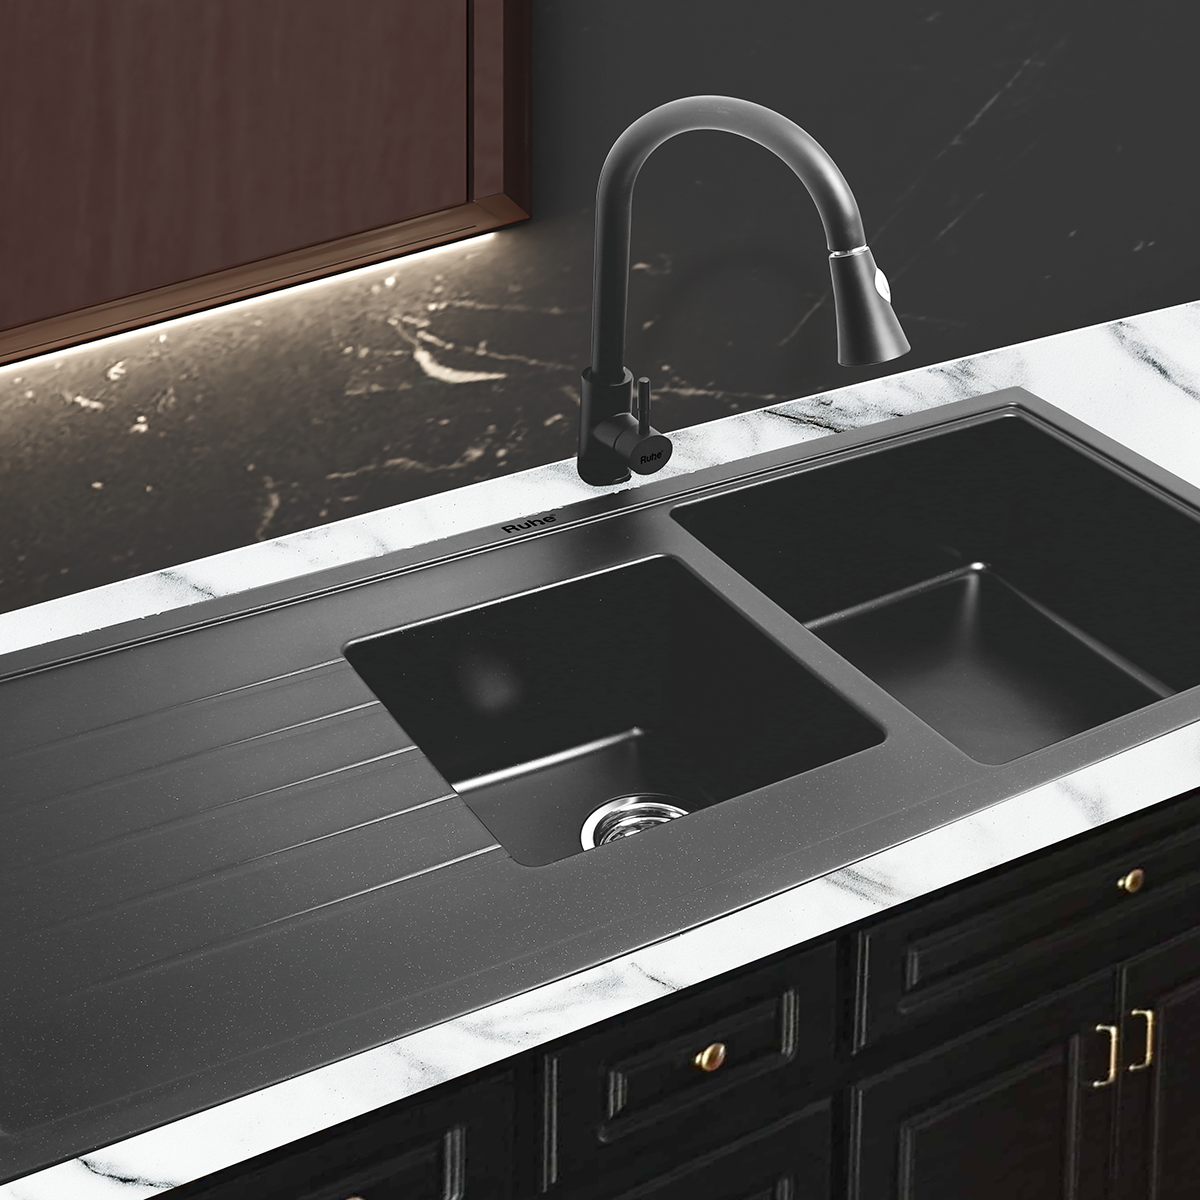 Quartz Double Bowl with Drainboard Kitchen Sink - Matte Black (45 x 20 x 9 inches) Lifestyle